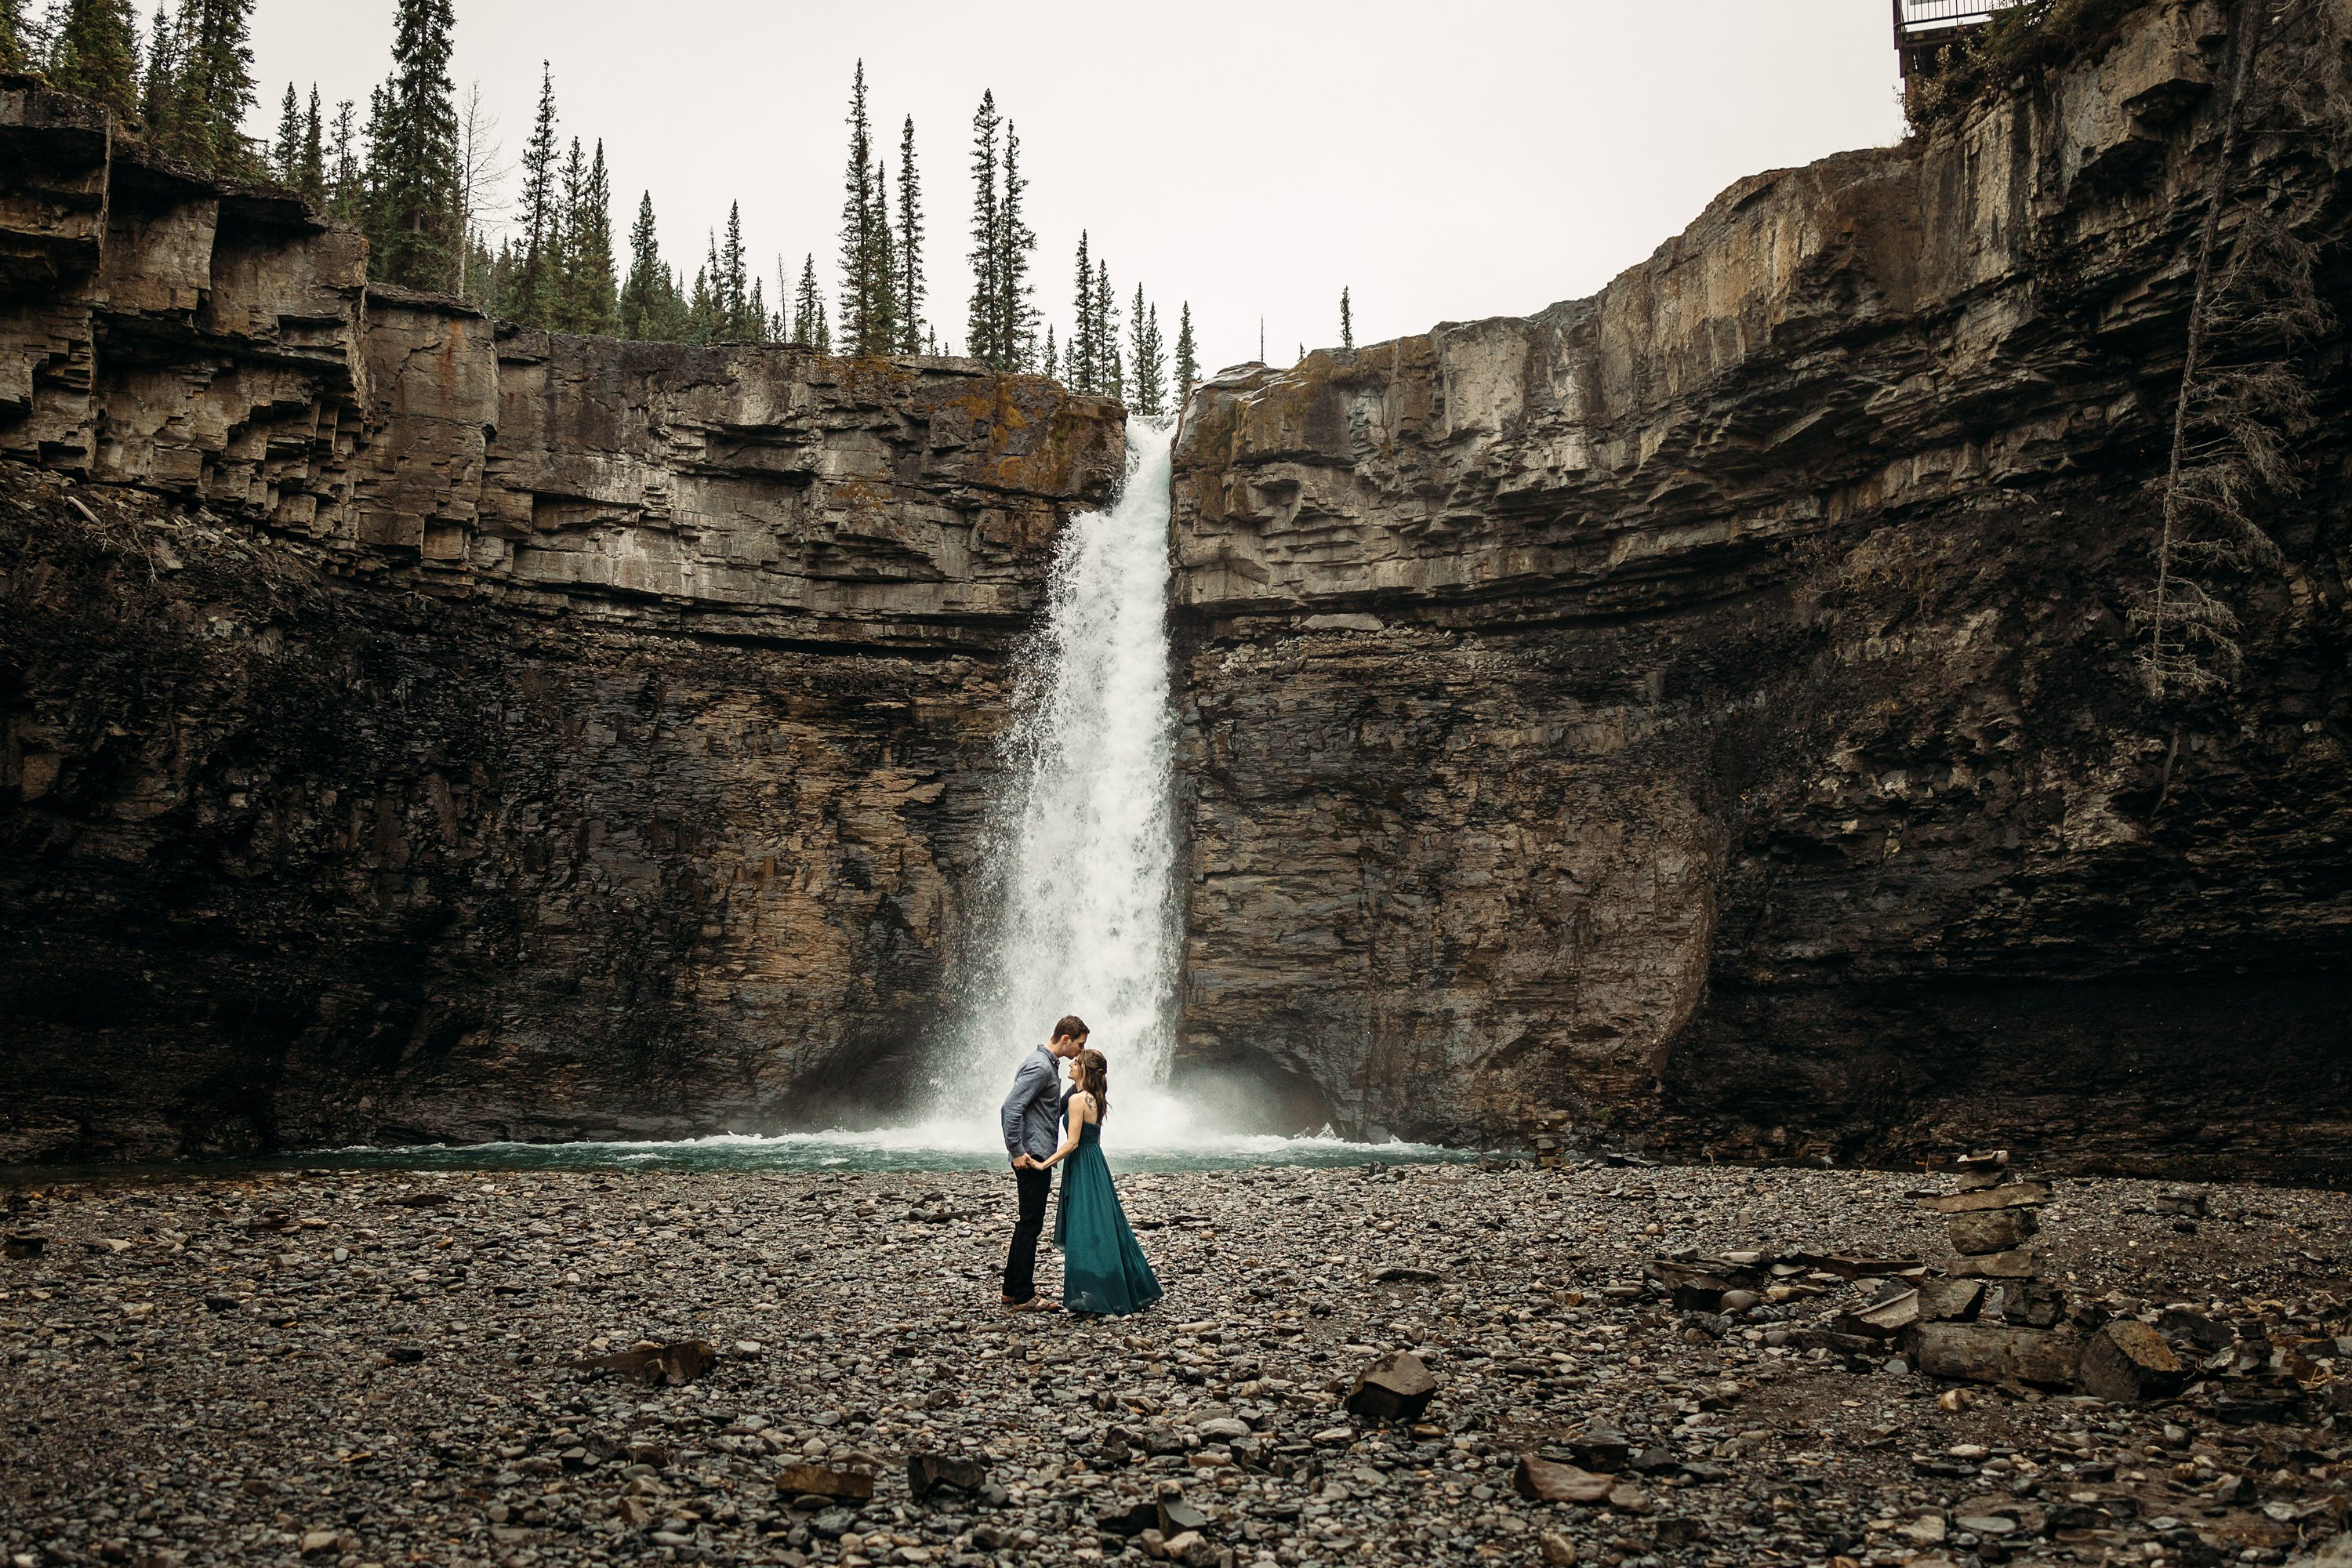  Calgary engagement photographer, couple adventure session